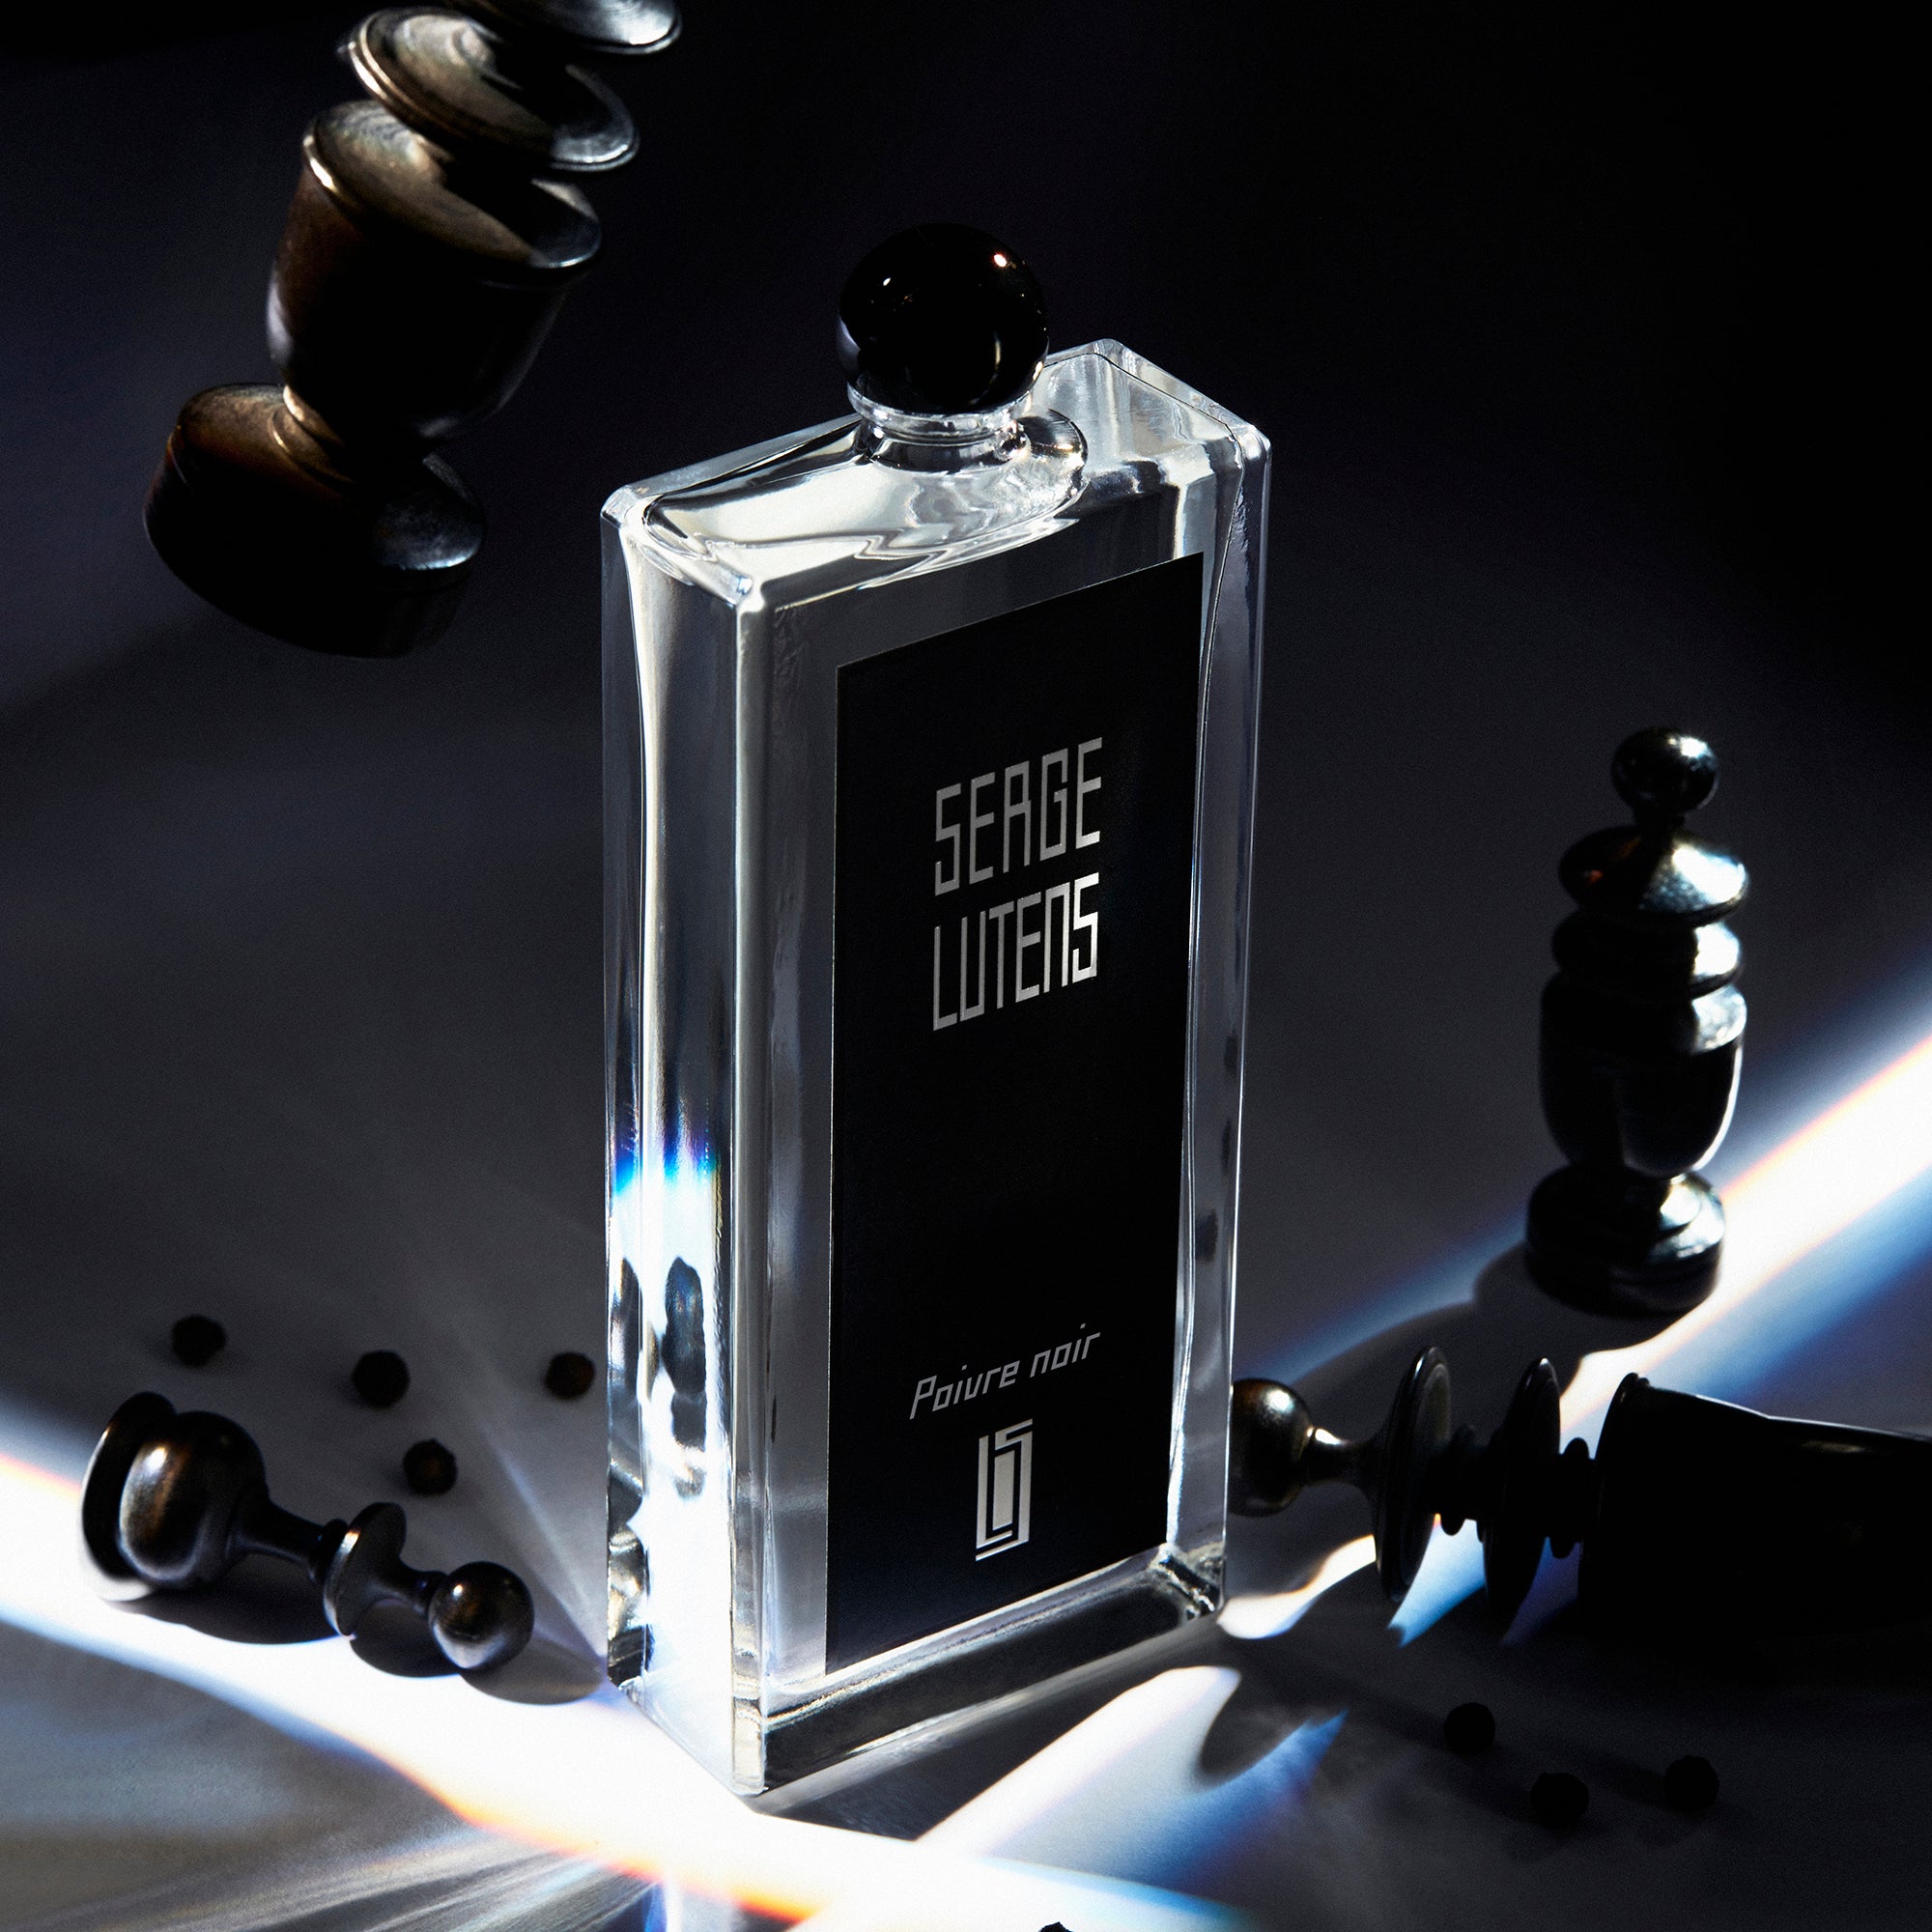 Parfum Poivre noir 100 ml Serge Lutens